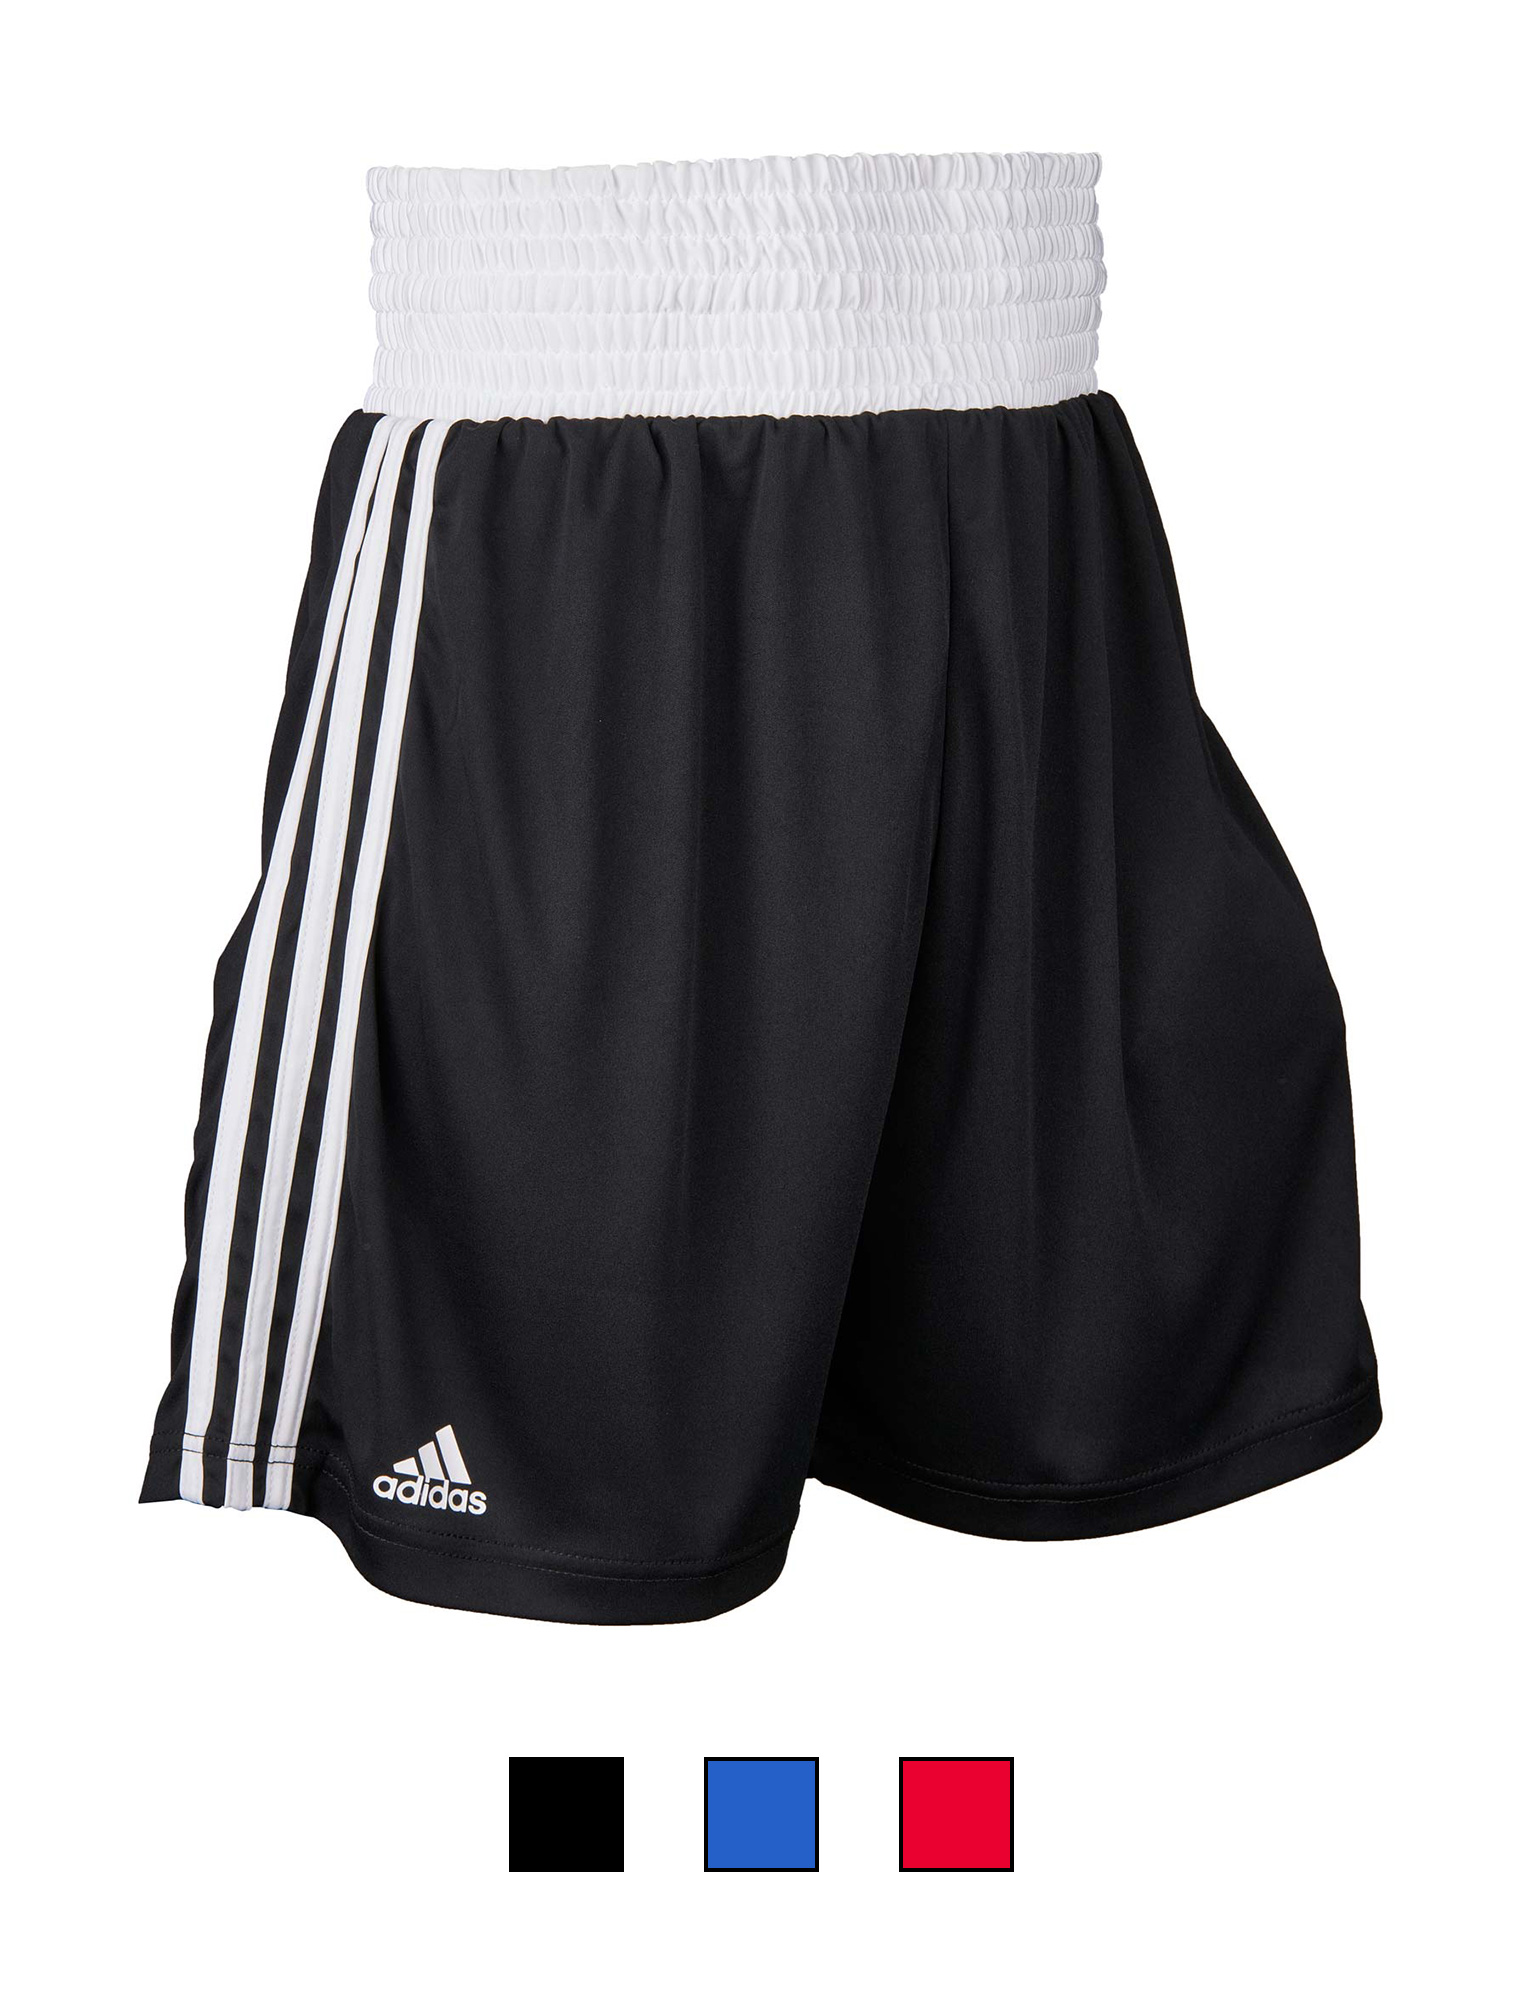 adidas boxing shorts ADIBTS02 black